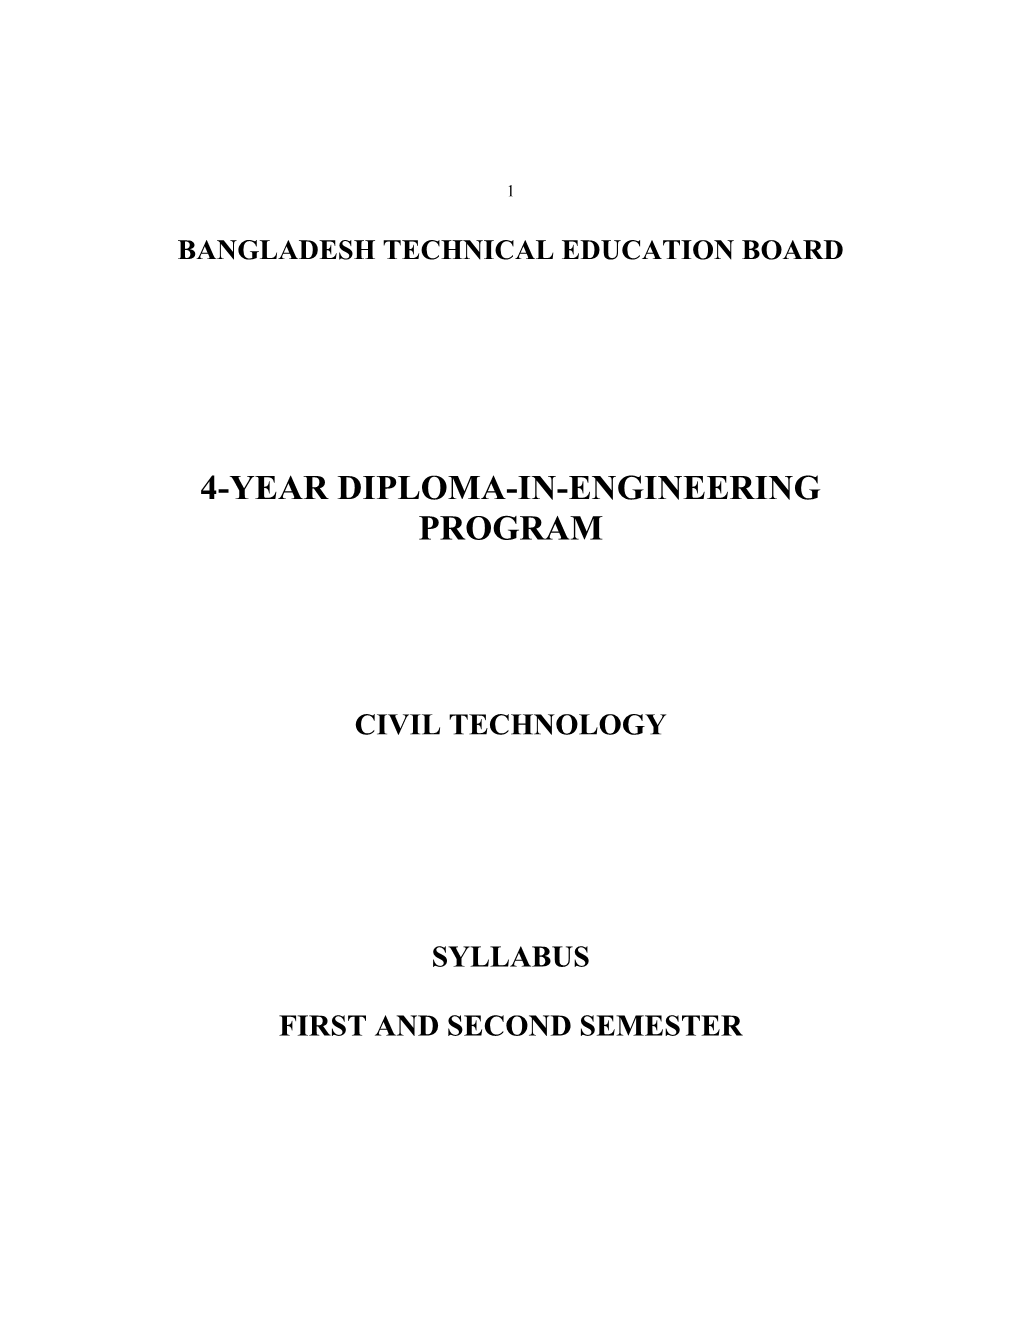 Bangladesh Technical Education Board